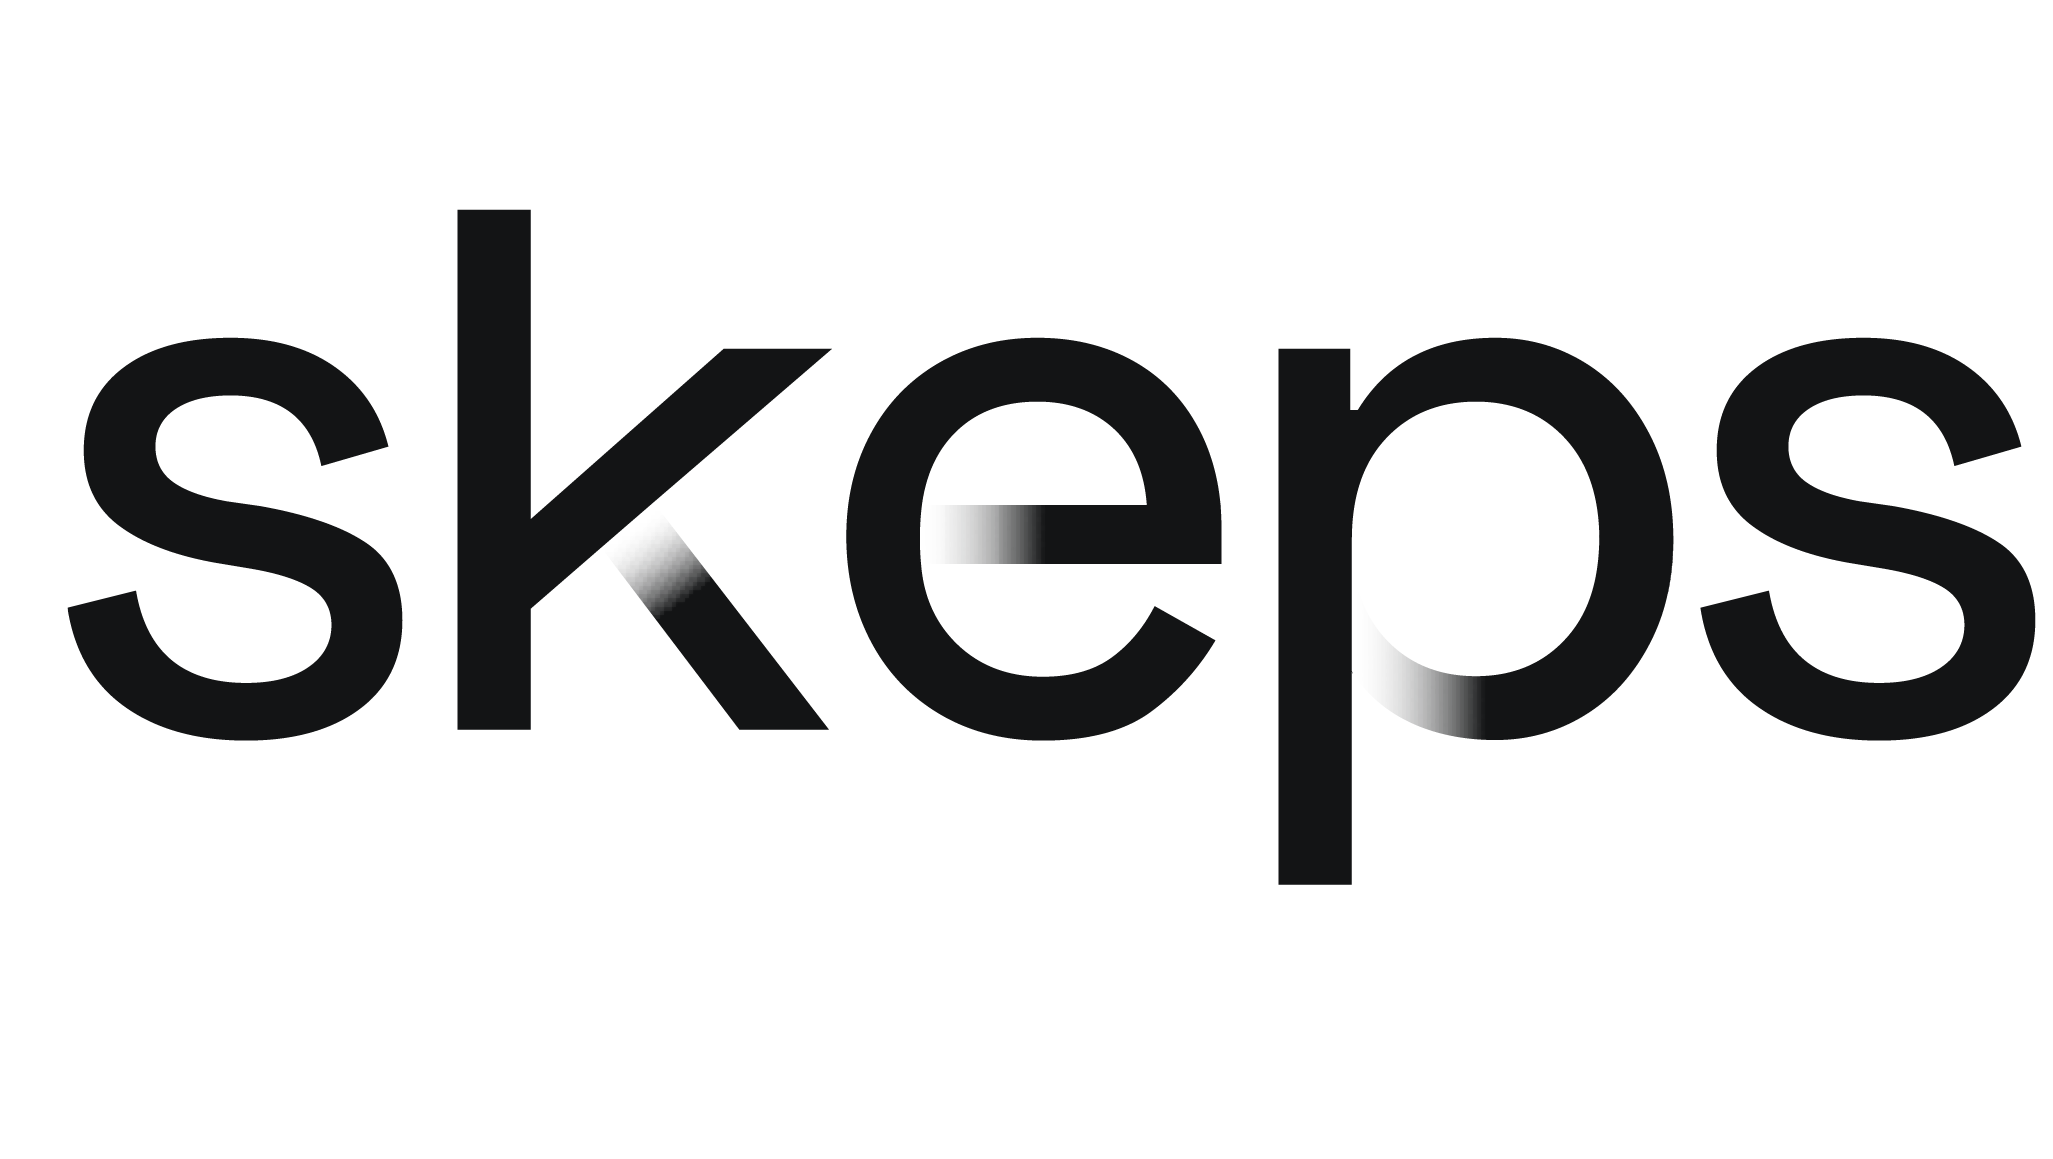 Skeps company logo